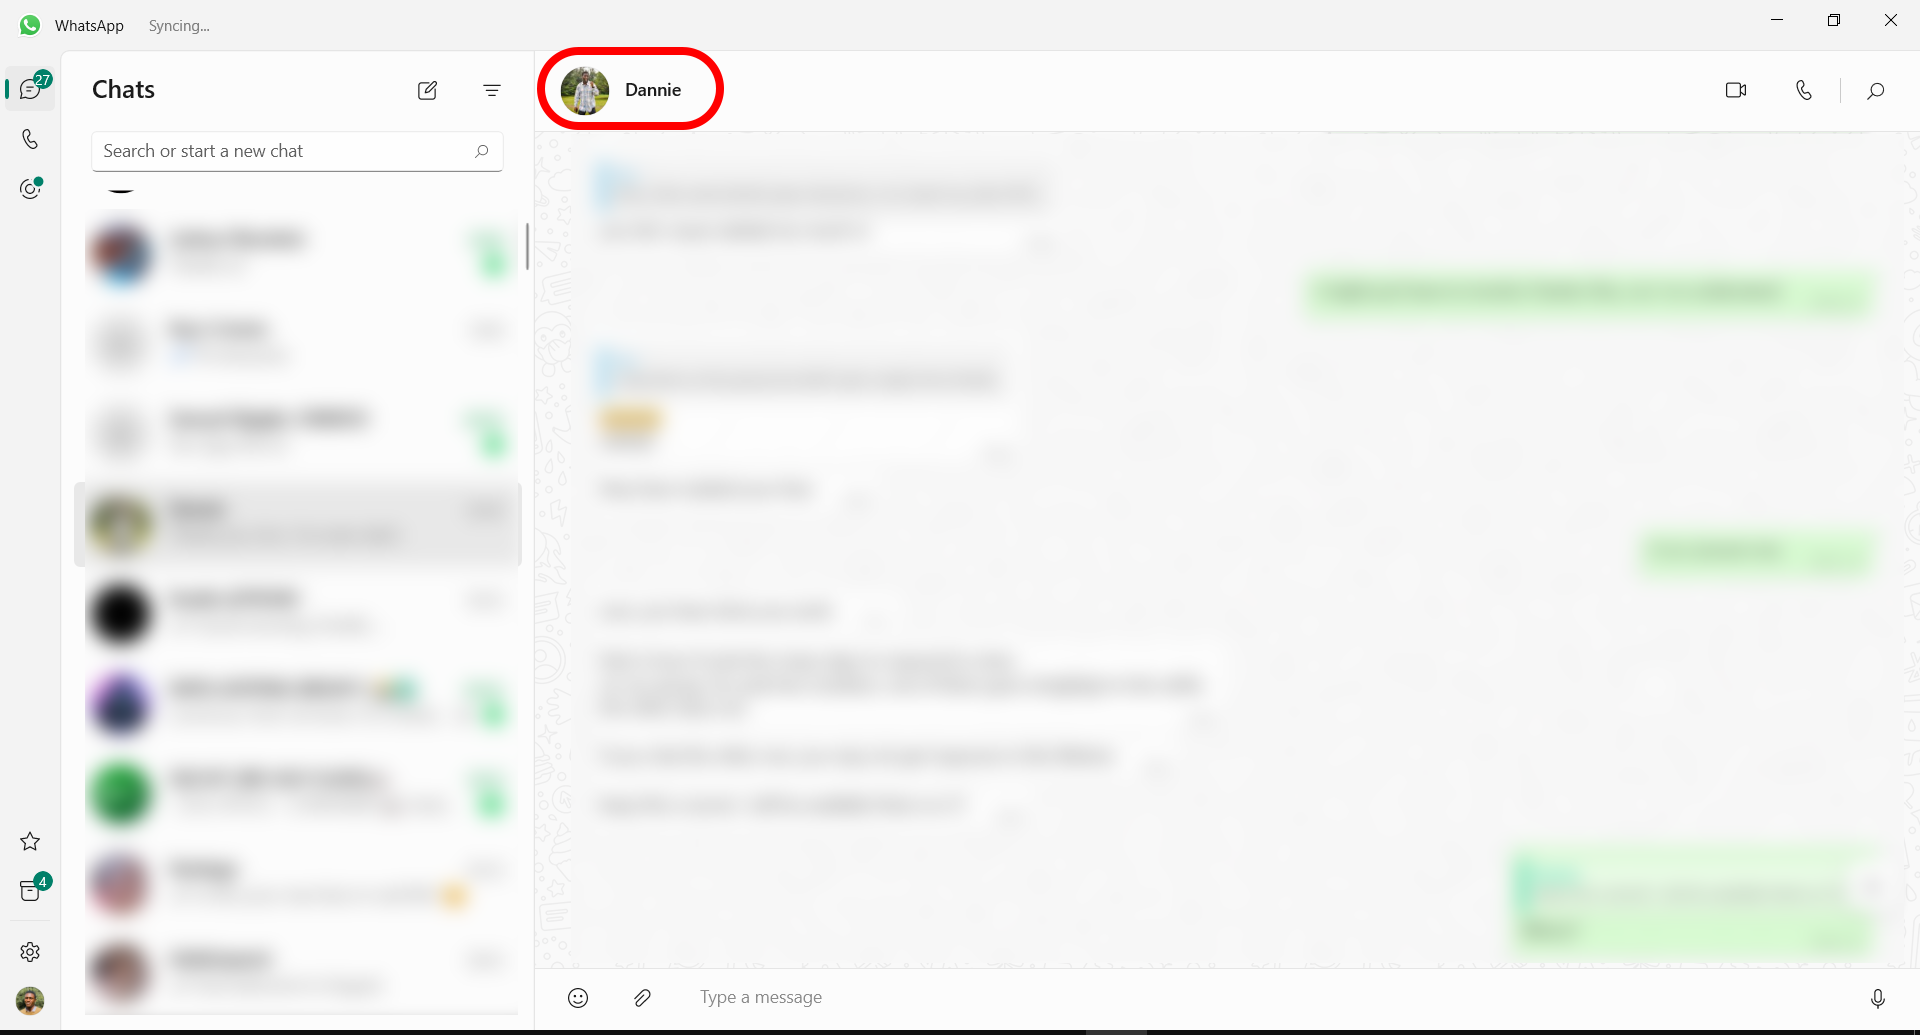 Viewing a contact info in WhatsApp desktop